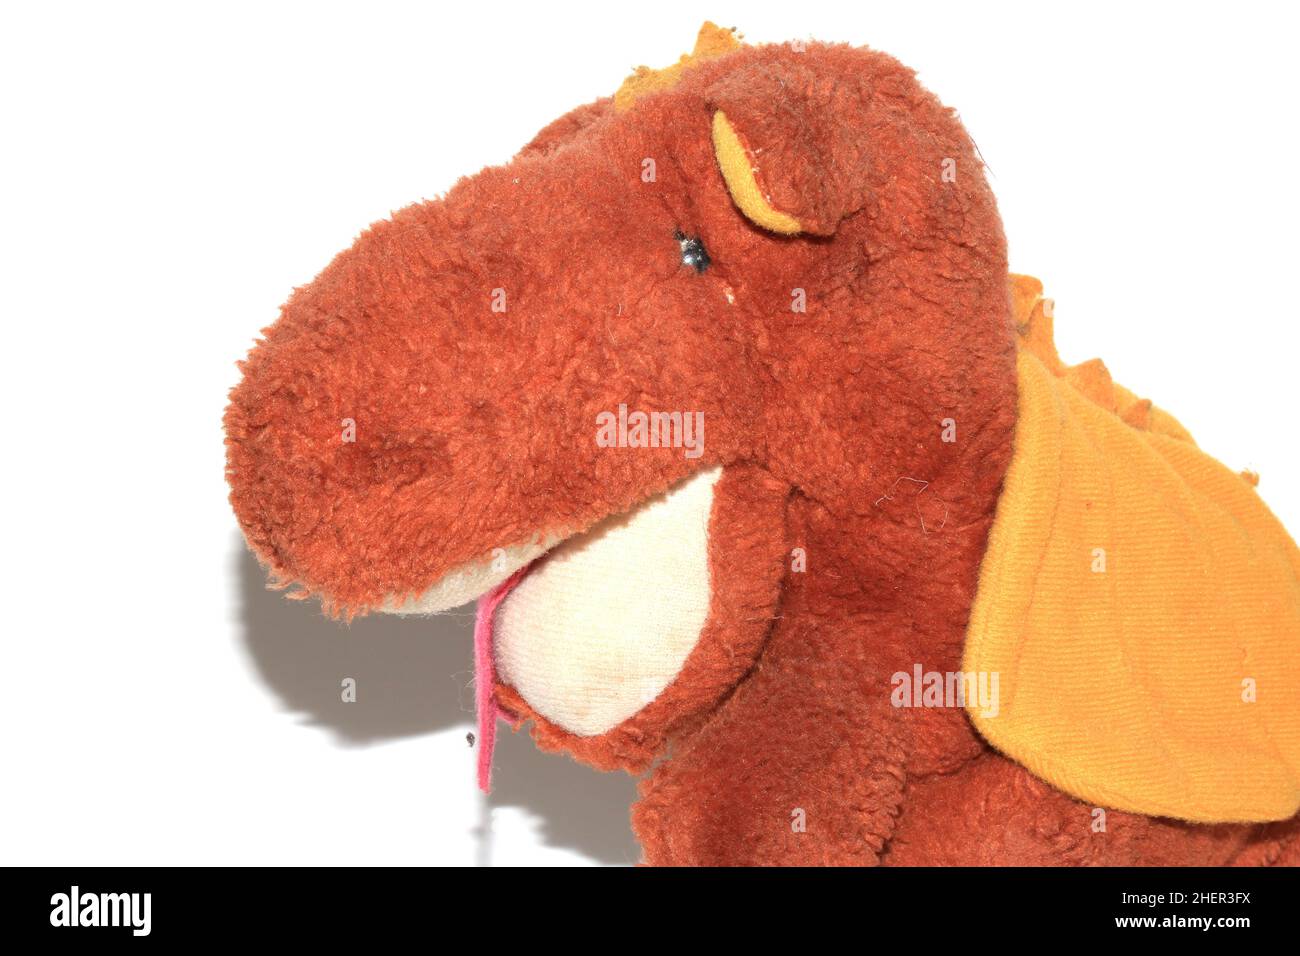 A Nostalga Old Stuffed Soft Toy Dragon Dinosaur Stock Photo